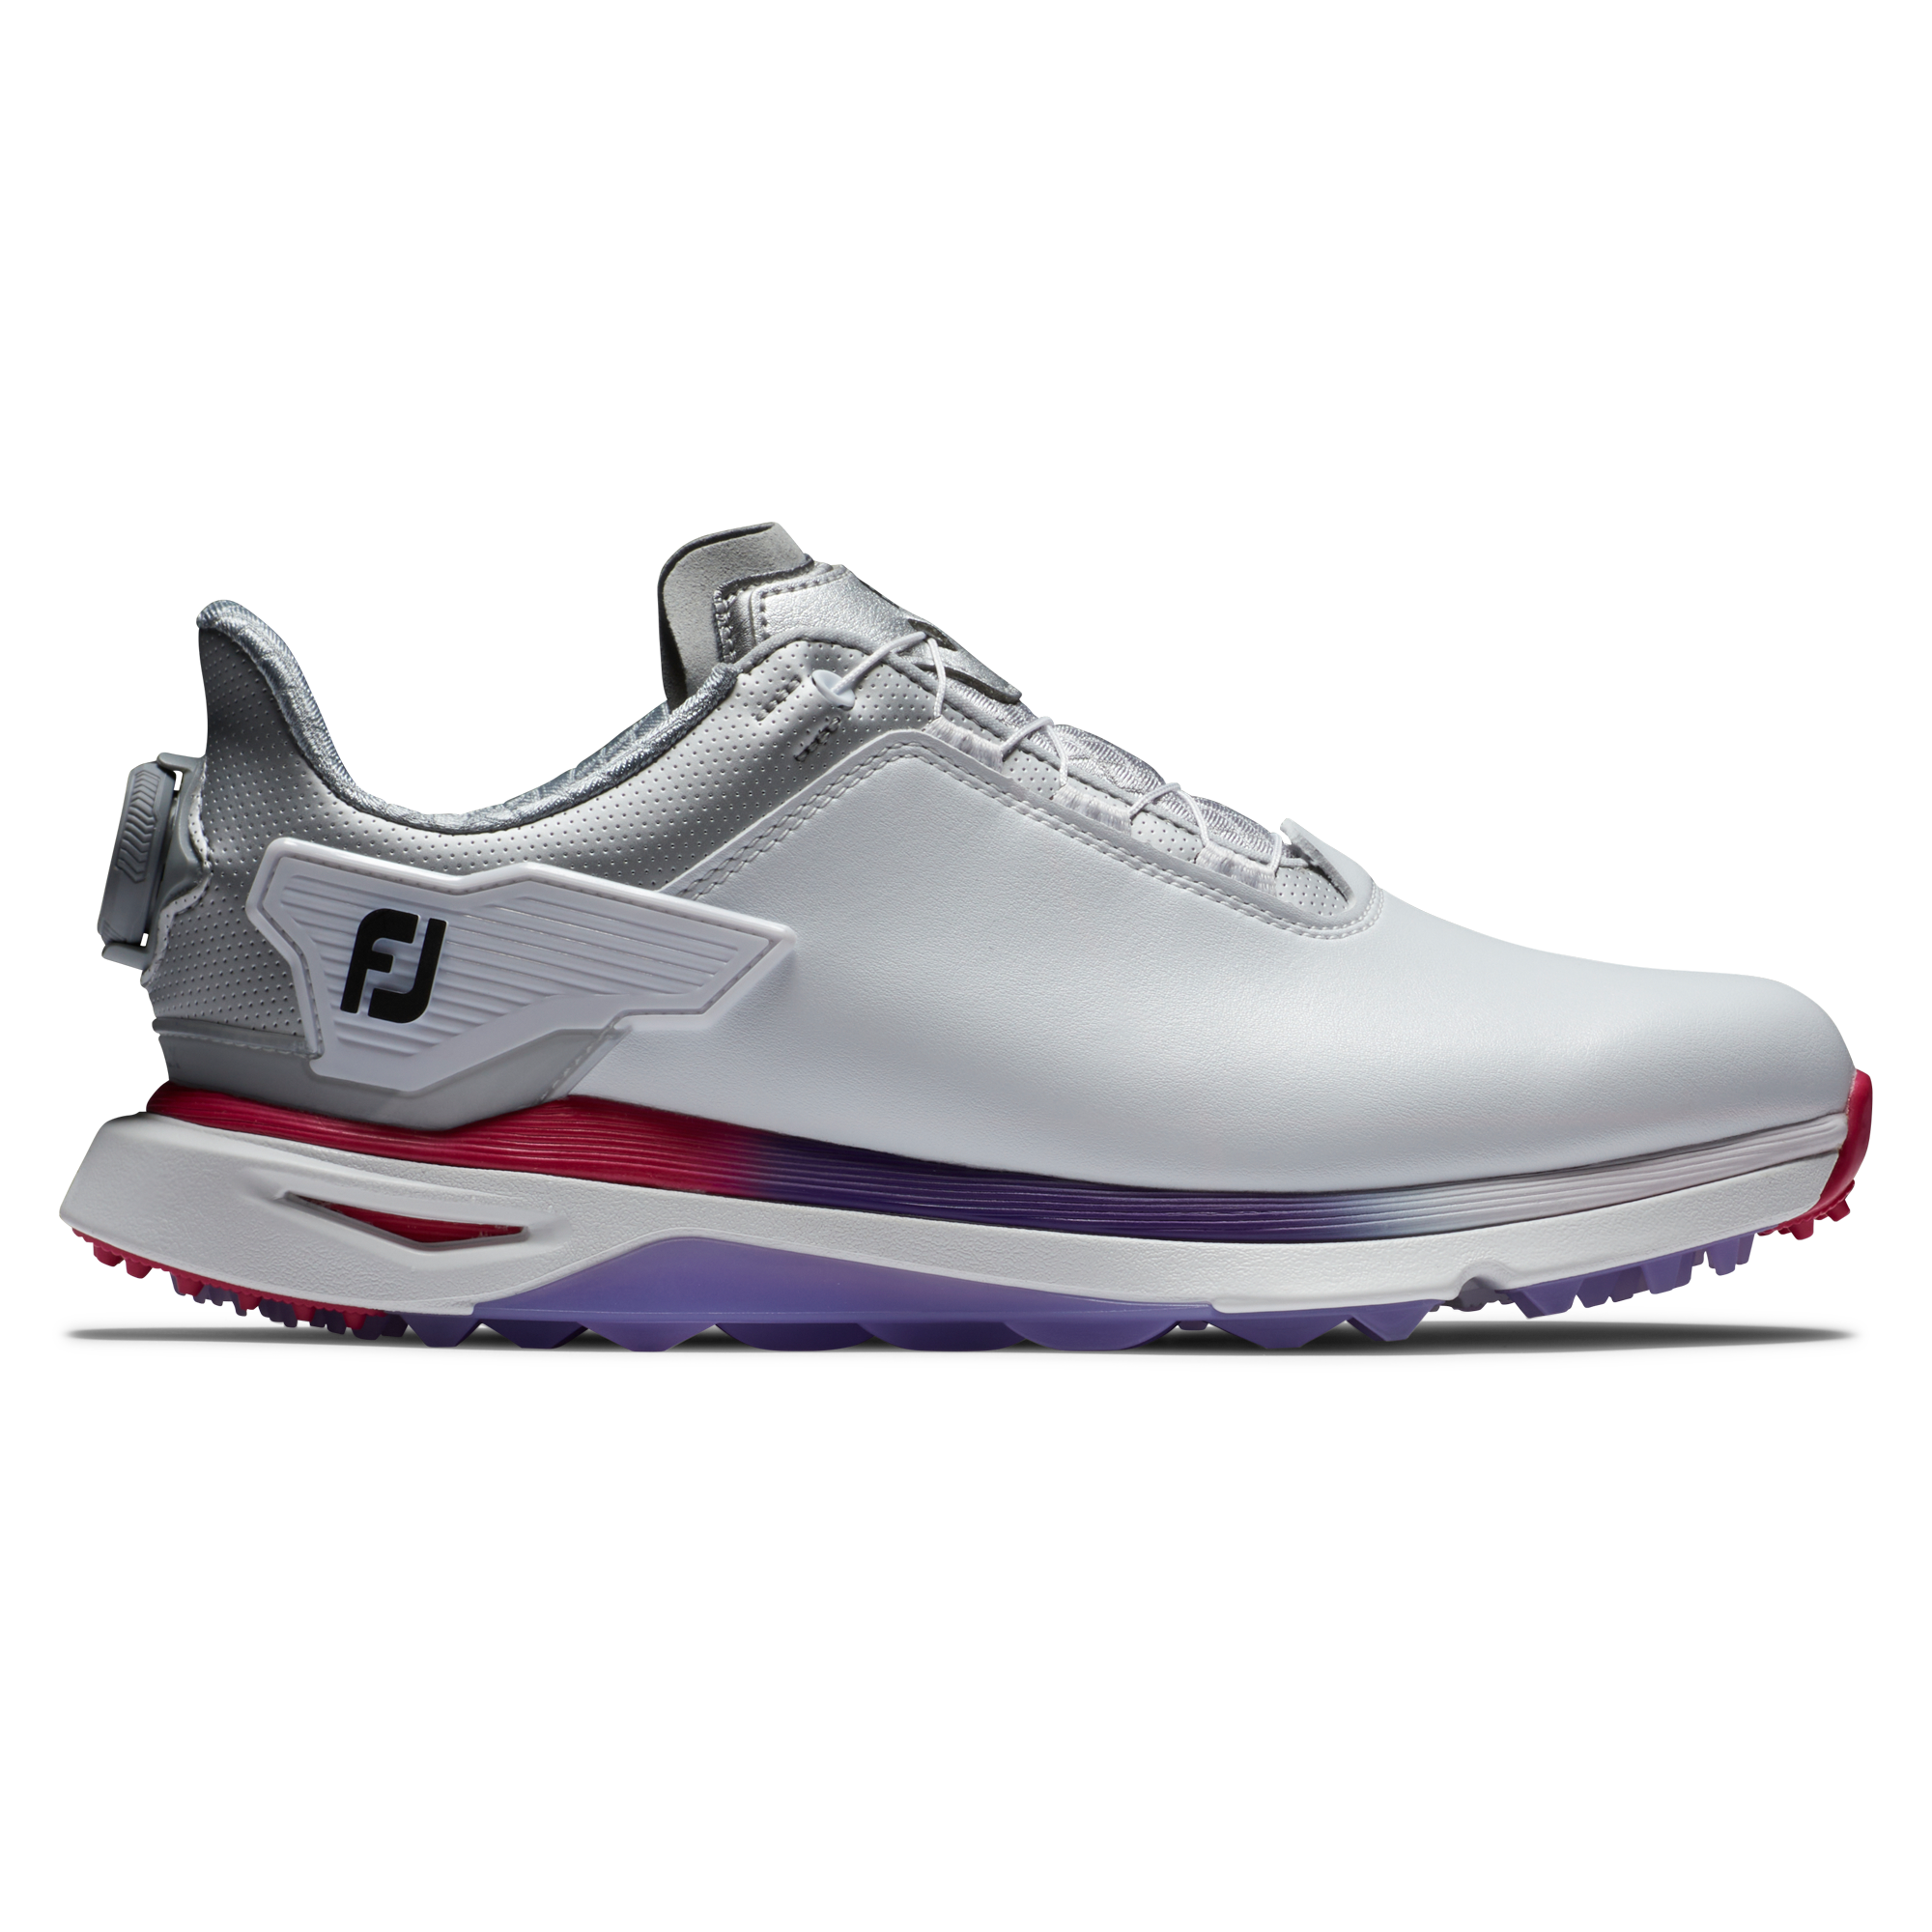 Women's Spikeless Golf Shoes - #1 Shoe in Golf | FootJoy